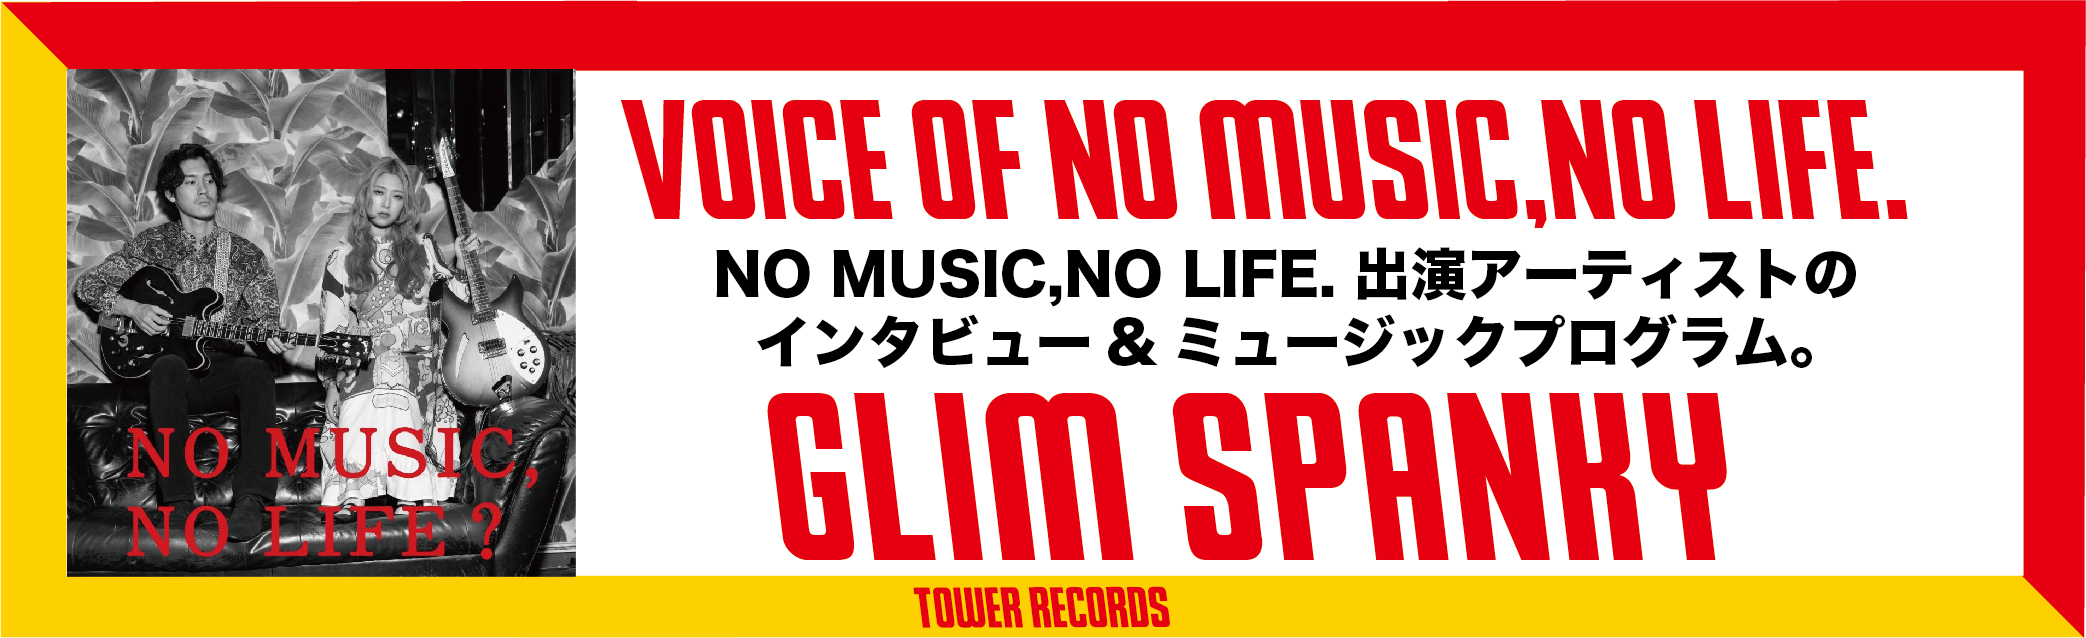 VOICE OF NO MUSIC, NO LIFE. GLIM SPANKY